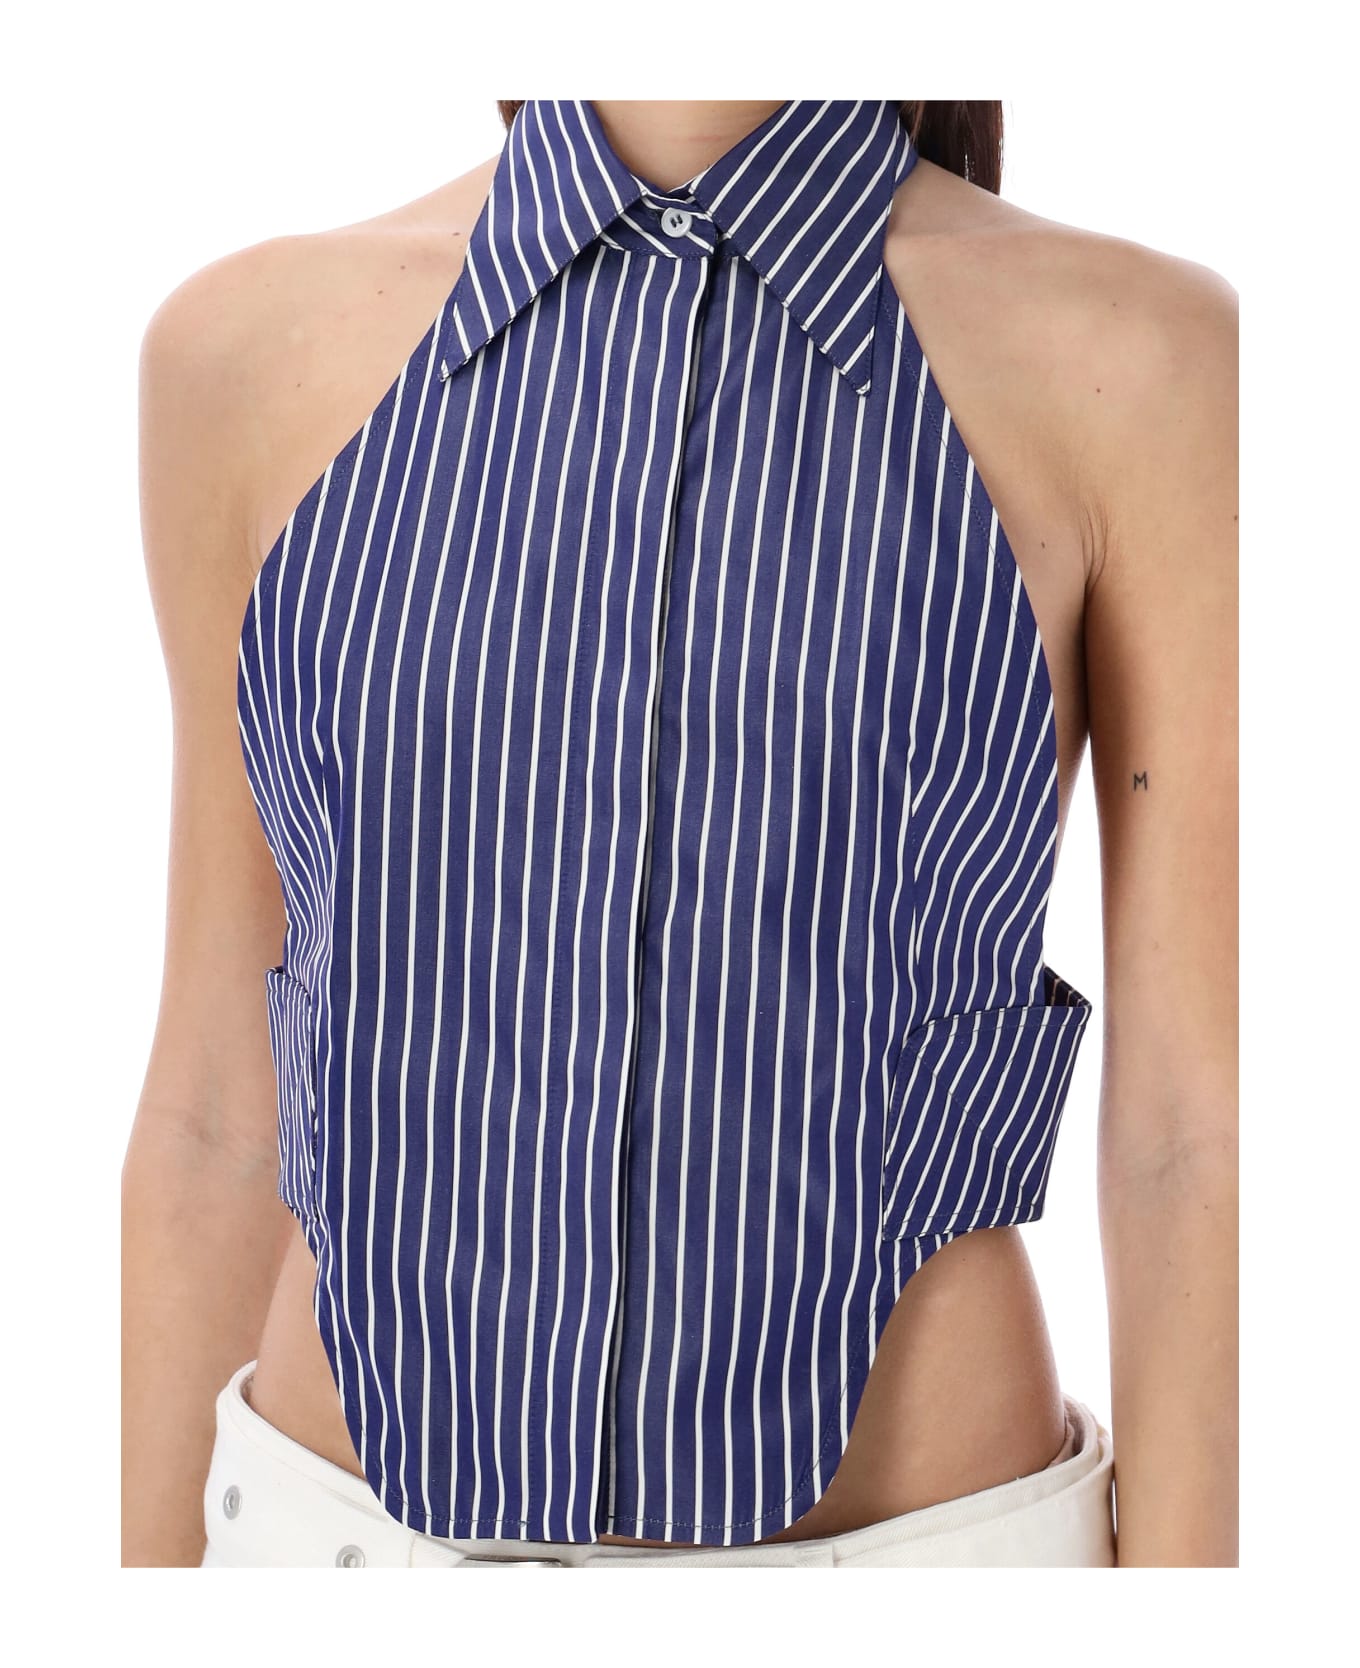 SSHEENA Cute Shirt Top Stripes - LIGHT BLUE STRIPE